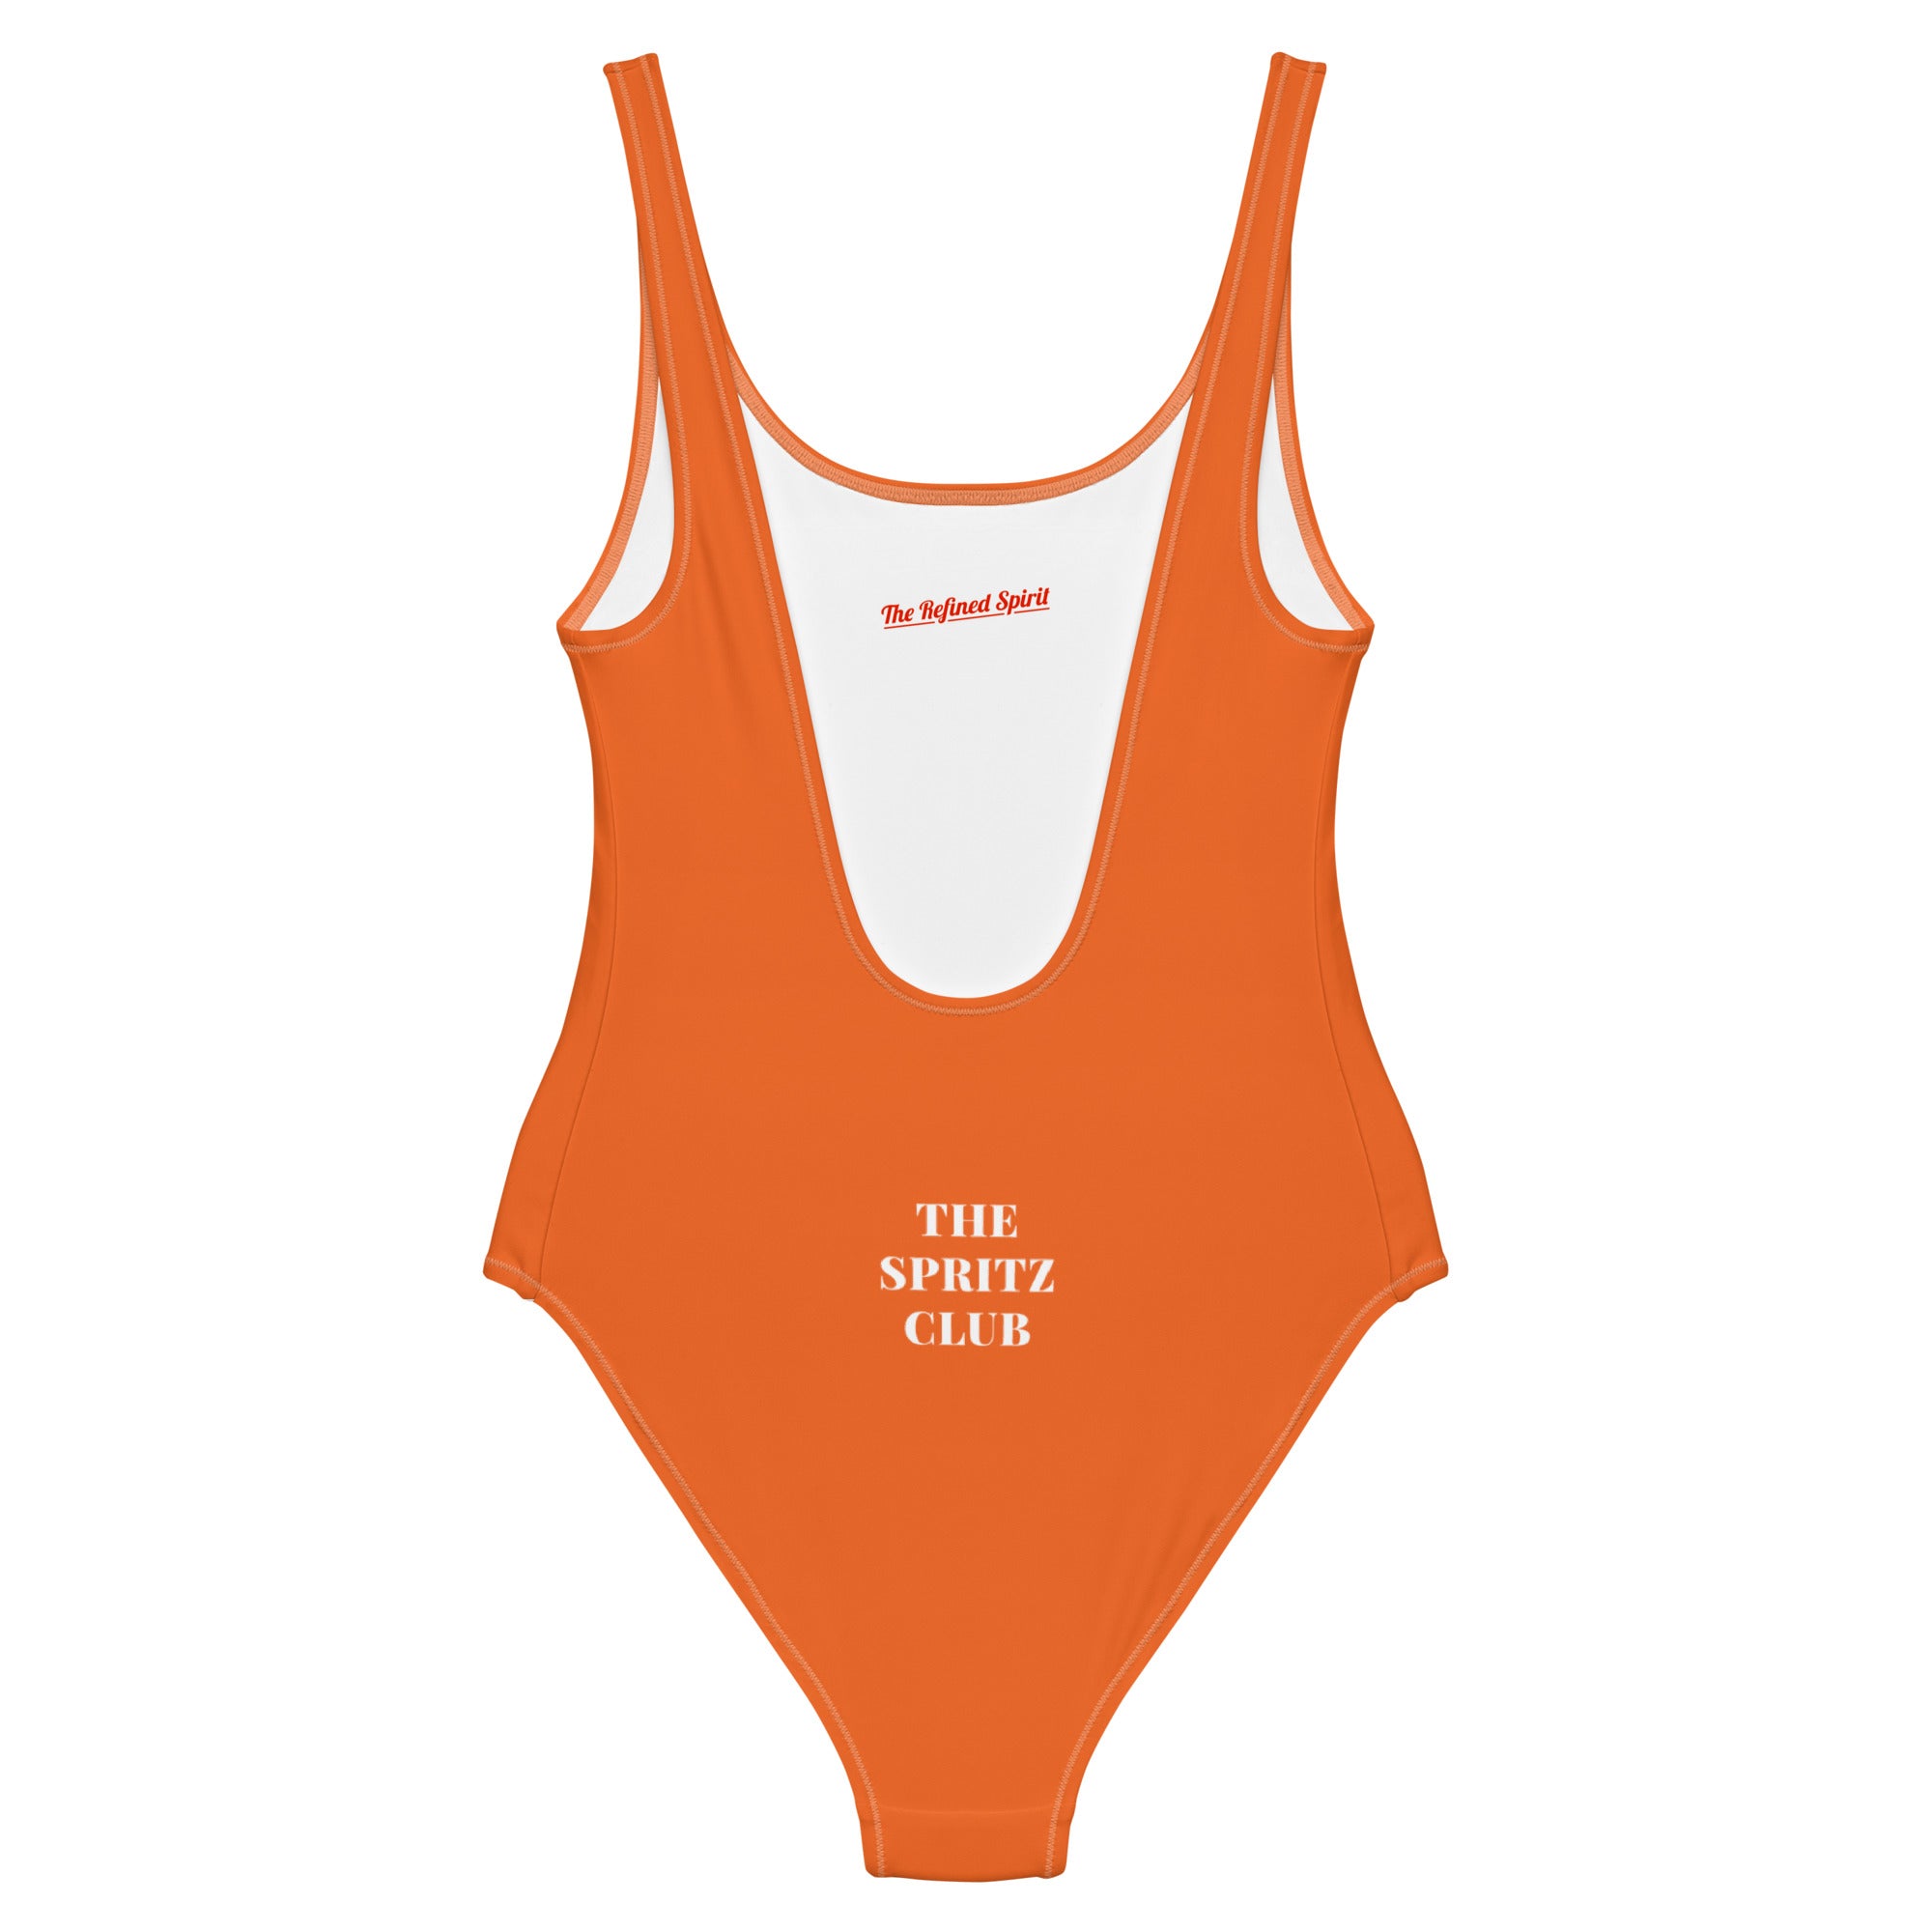 The Spritz Club - Swimsuit - The Refined Spirit